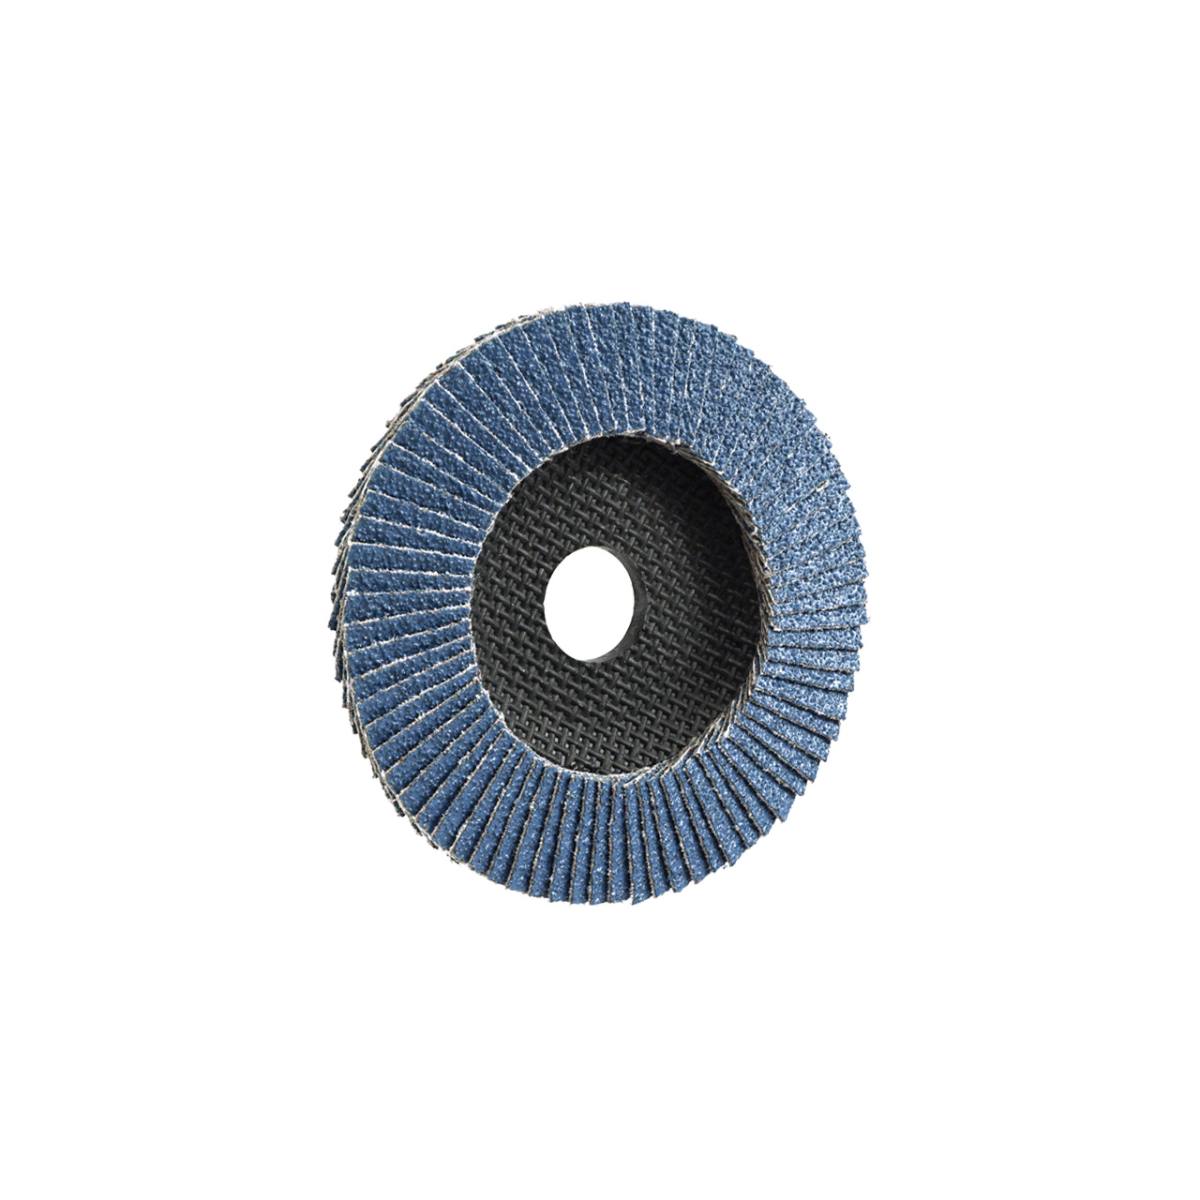 TRIMFIX ZIRCOPUR, 115 mm x 22,2 mm, grano 80, disco de láminas